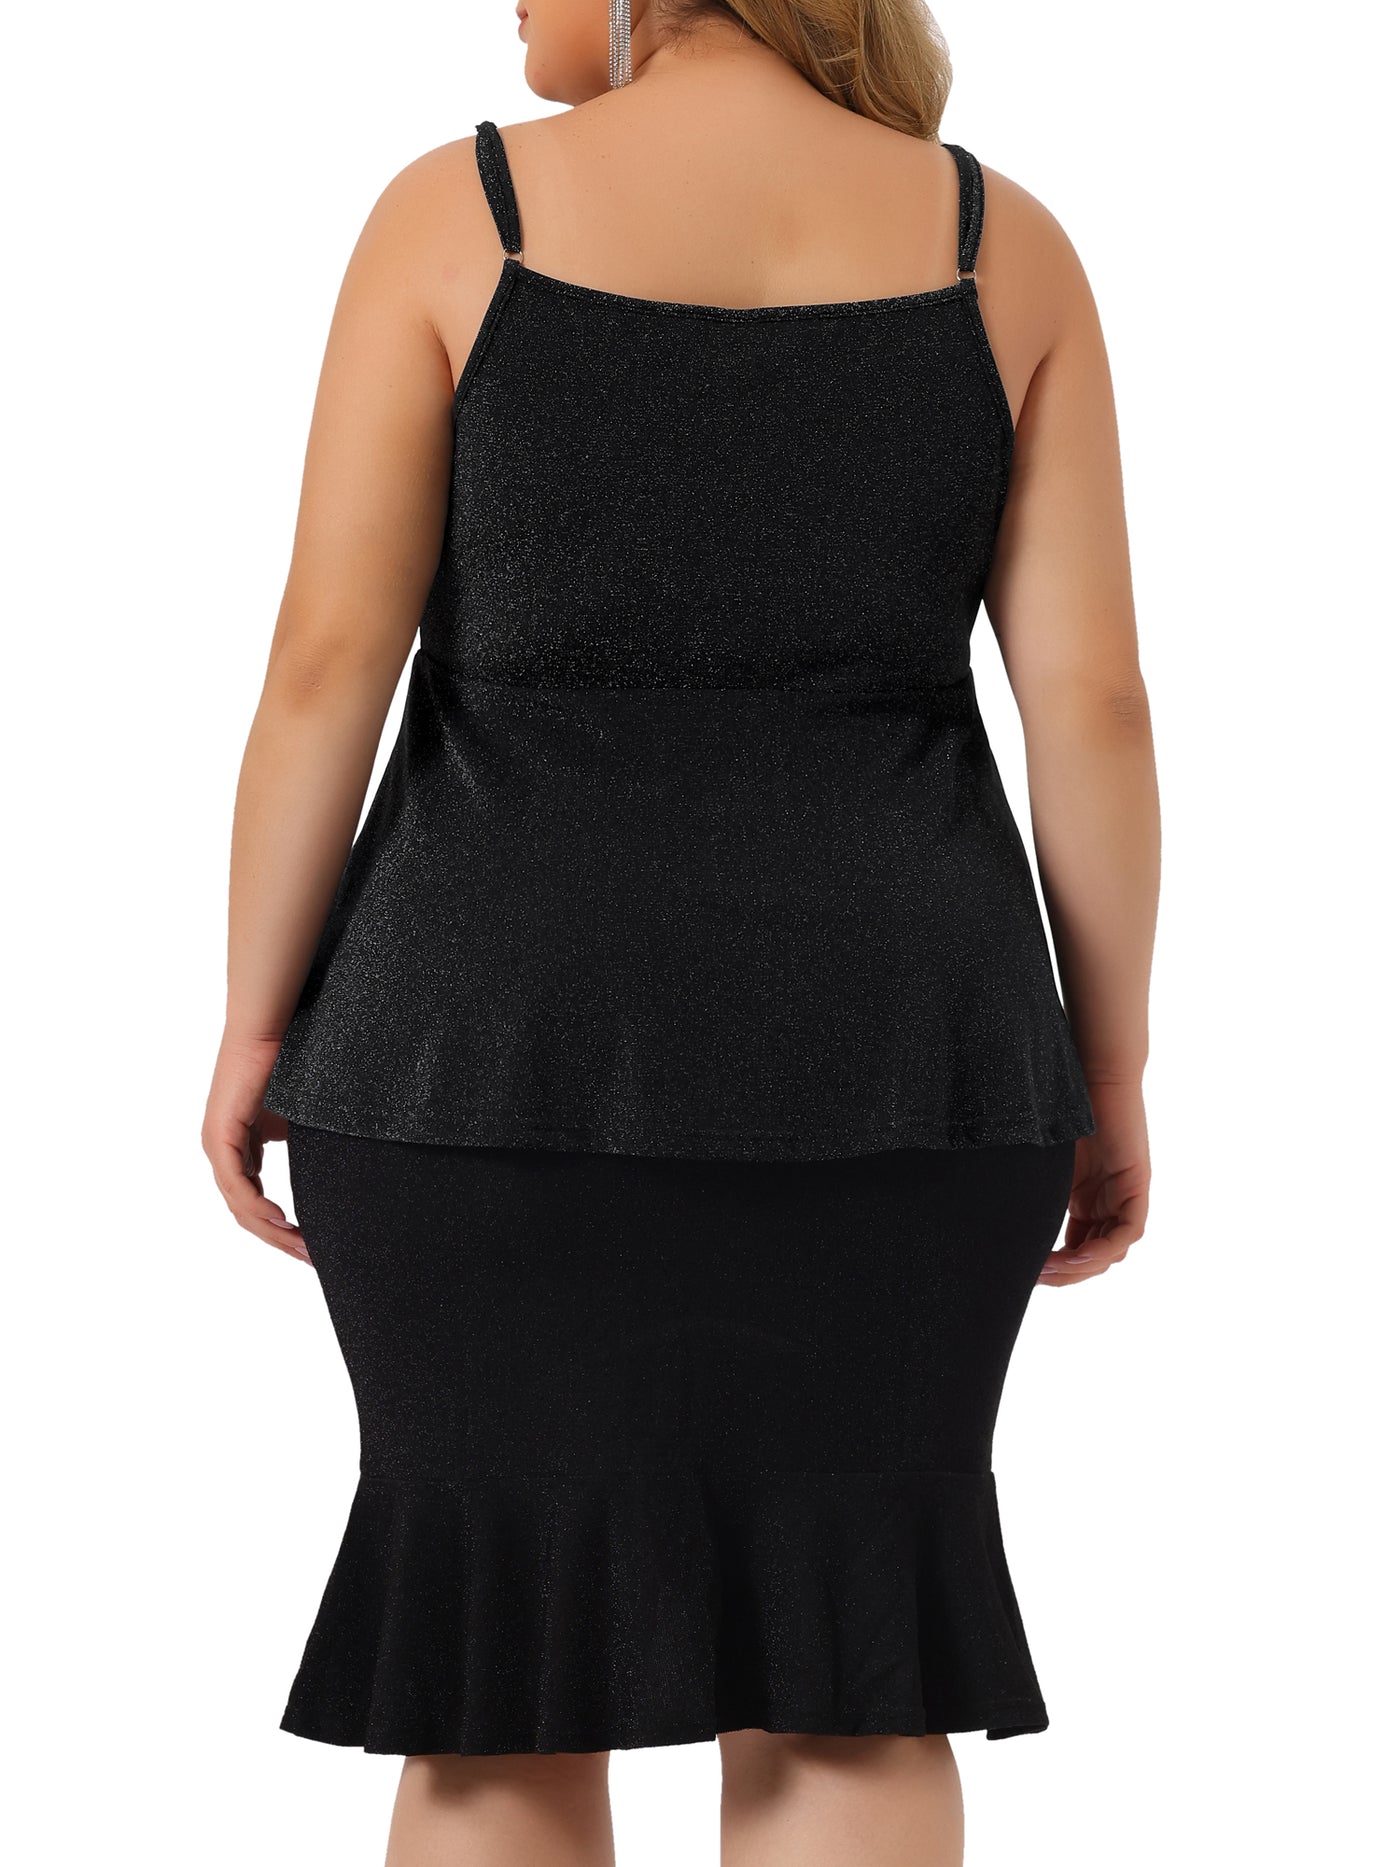 Bublédon Plus Size Camisole for Women V Neck Wrap Peplum Sleeveless Ruffle Hem Cami Tank Tops